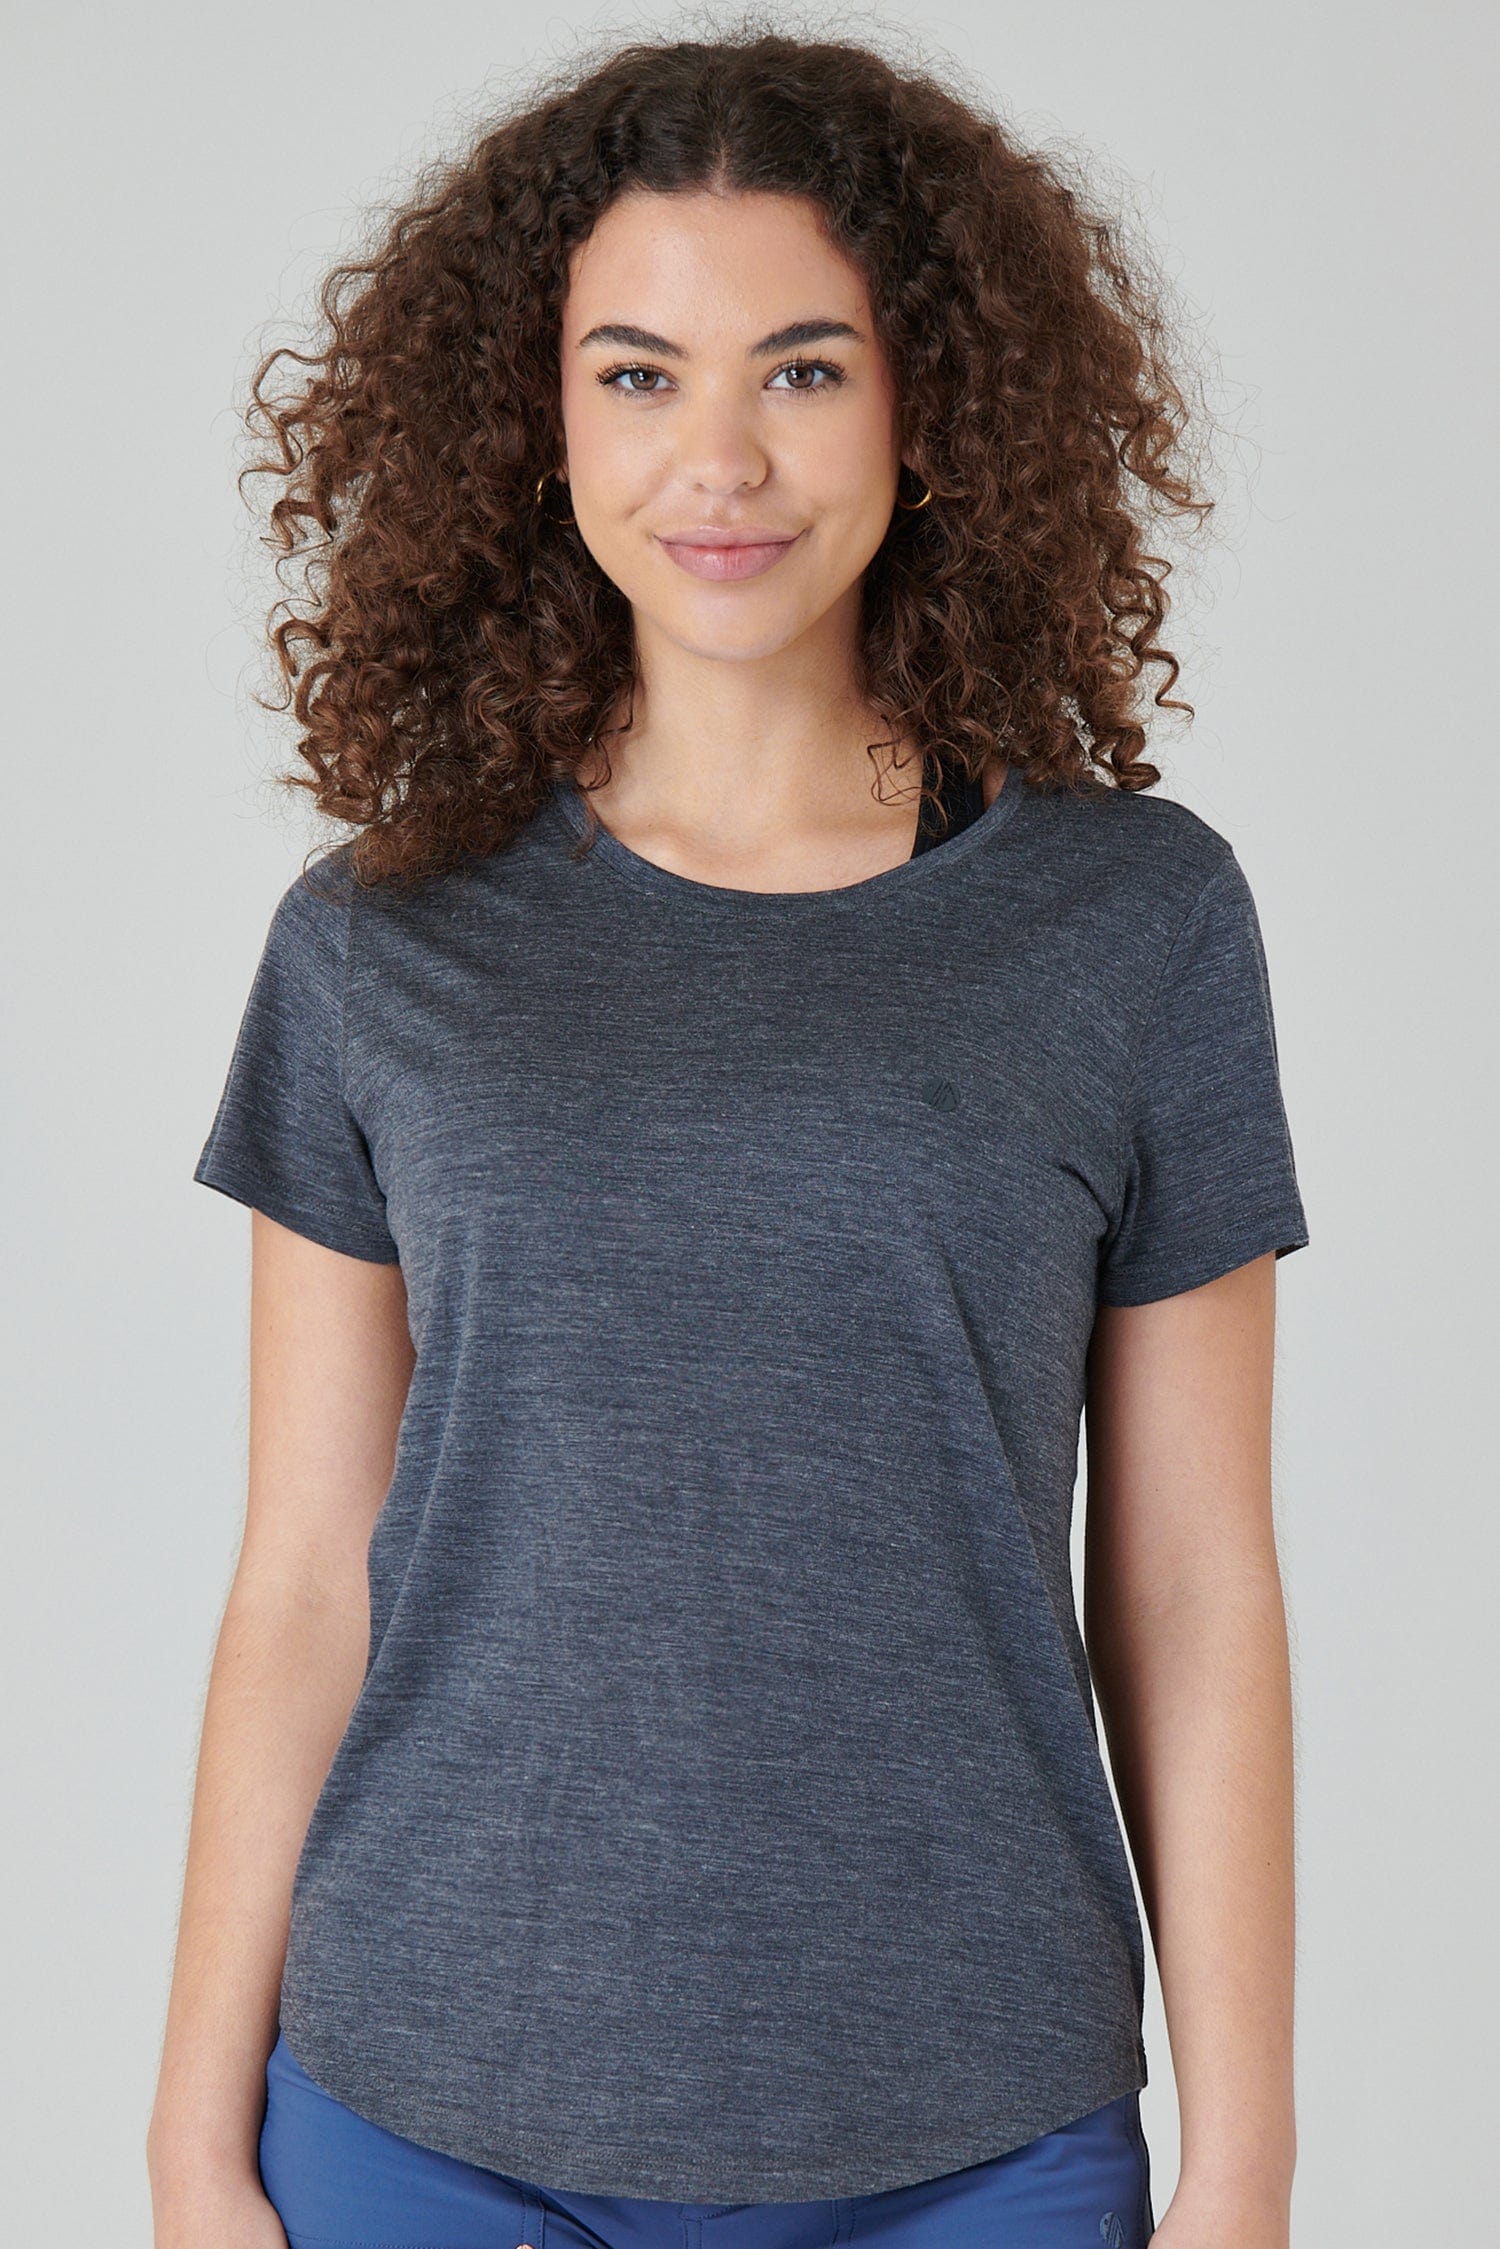 Merino Wool Crew Neck T-shirt - Charcoal - Small / Uk10 - Womens - Acai Outdoorwear